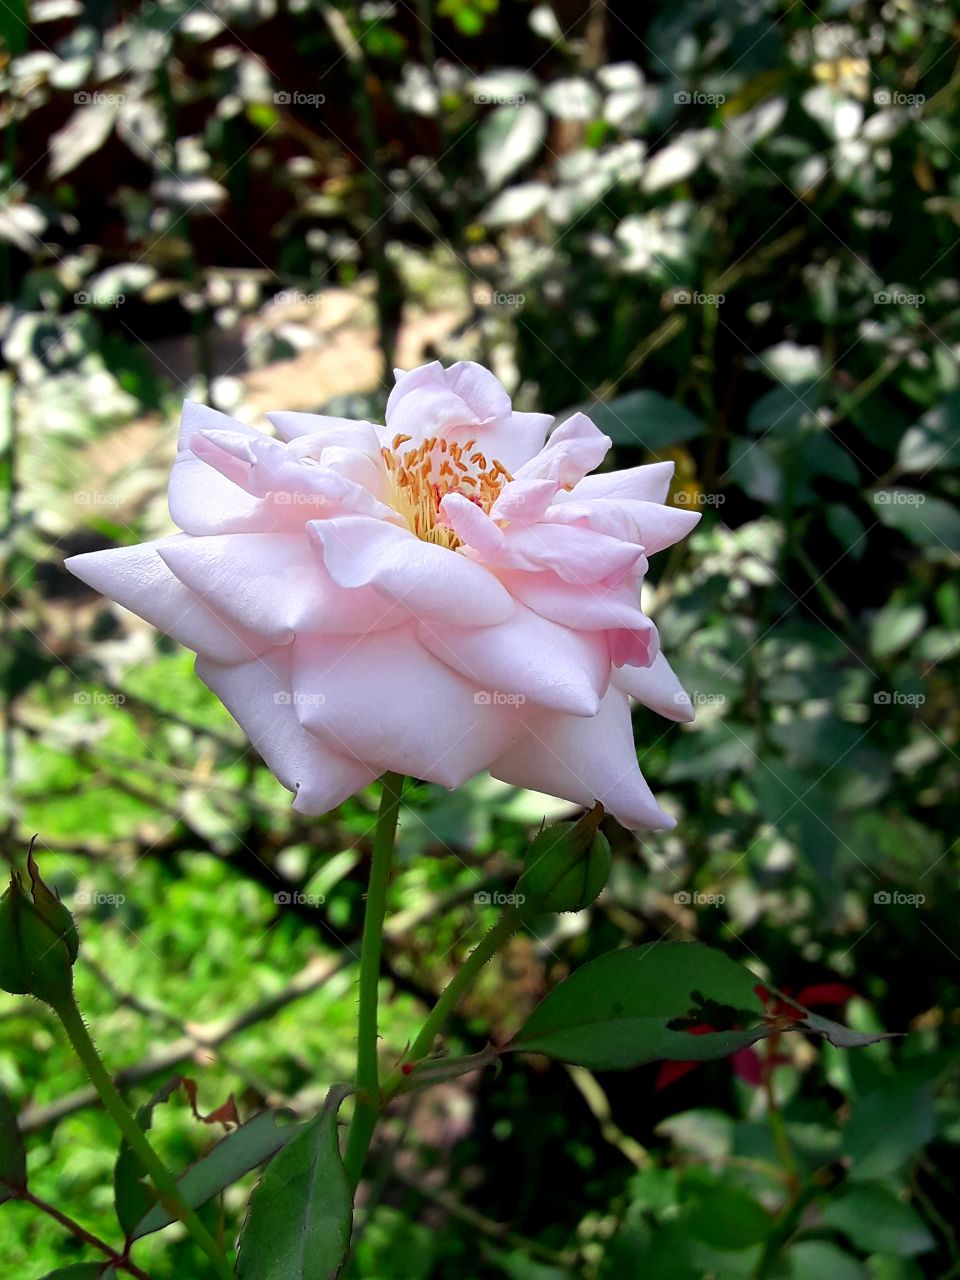 Complete blooming rose flower